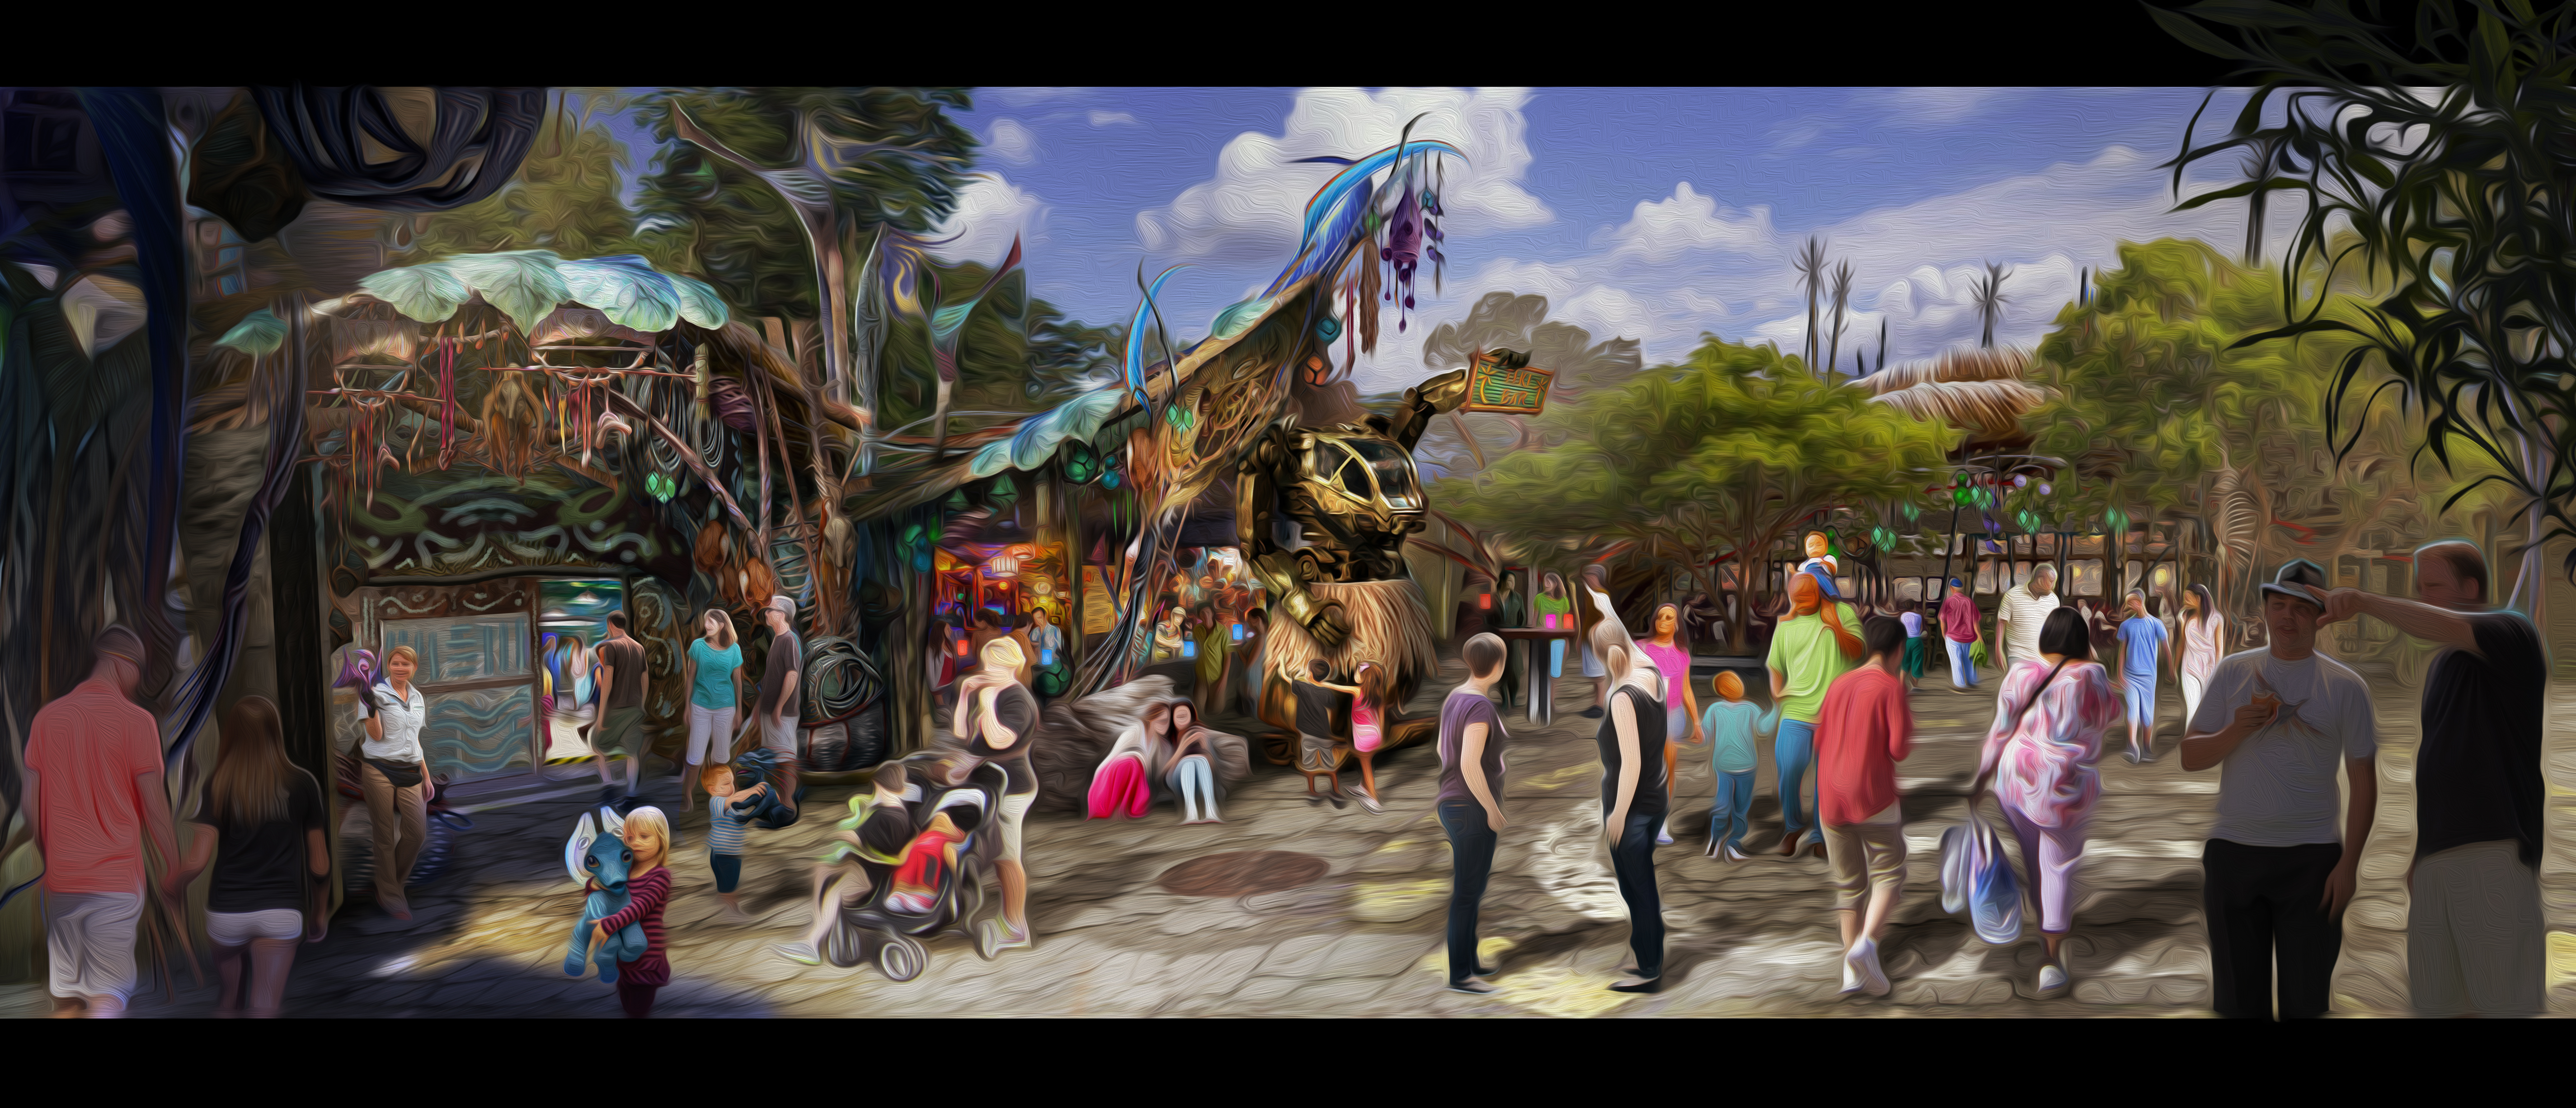 Pandora – The World of Avatar is coming to Walt Disney World Disney's Animal Kingdom